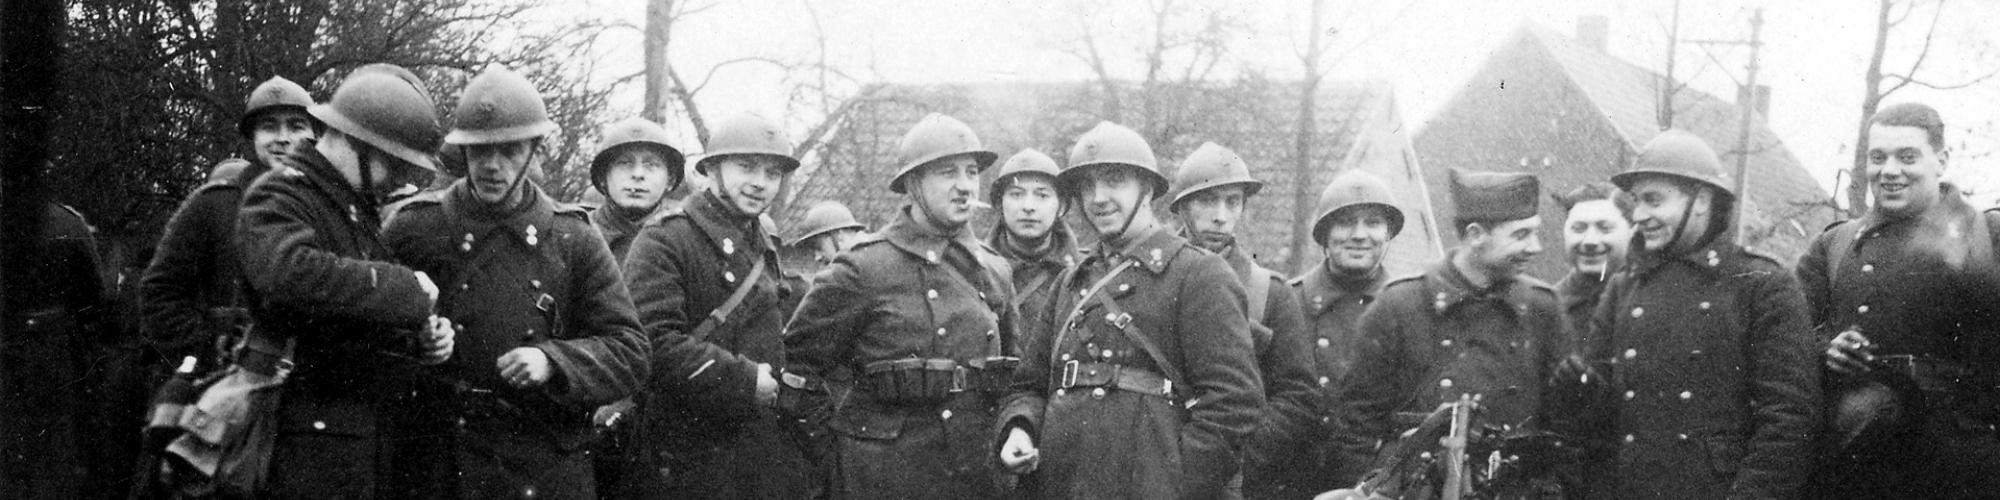 Belgian soldiers Second World War